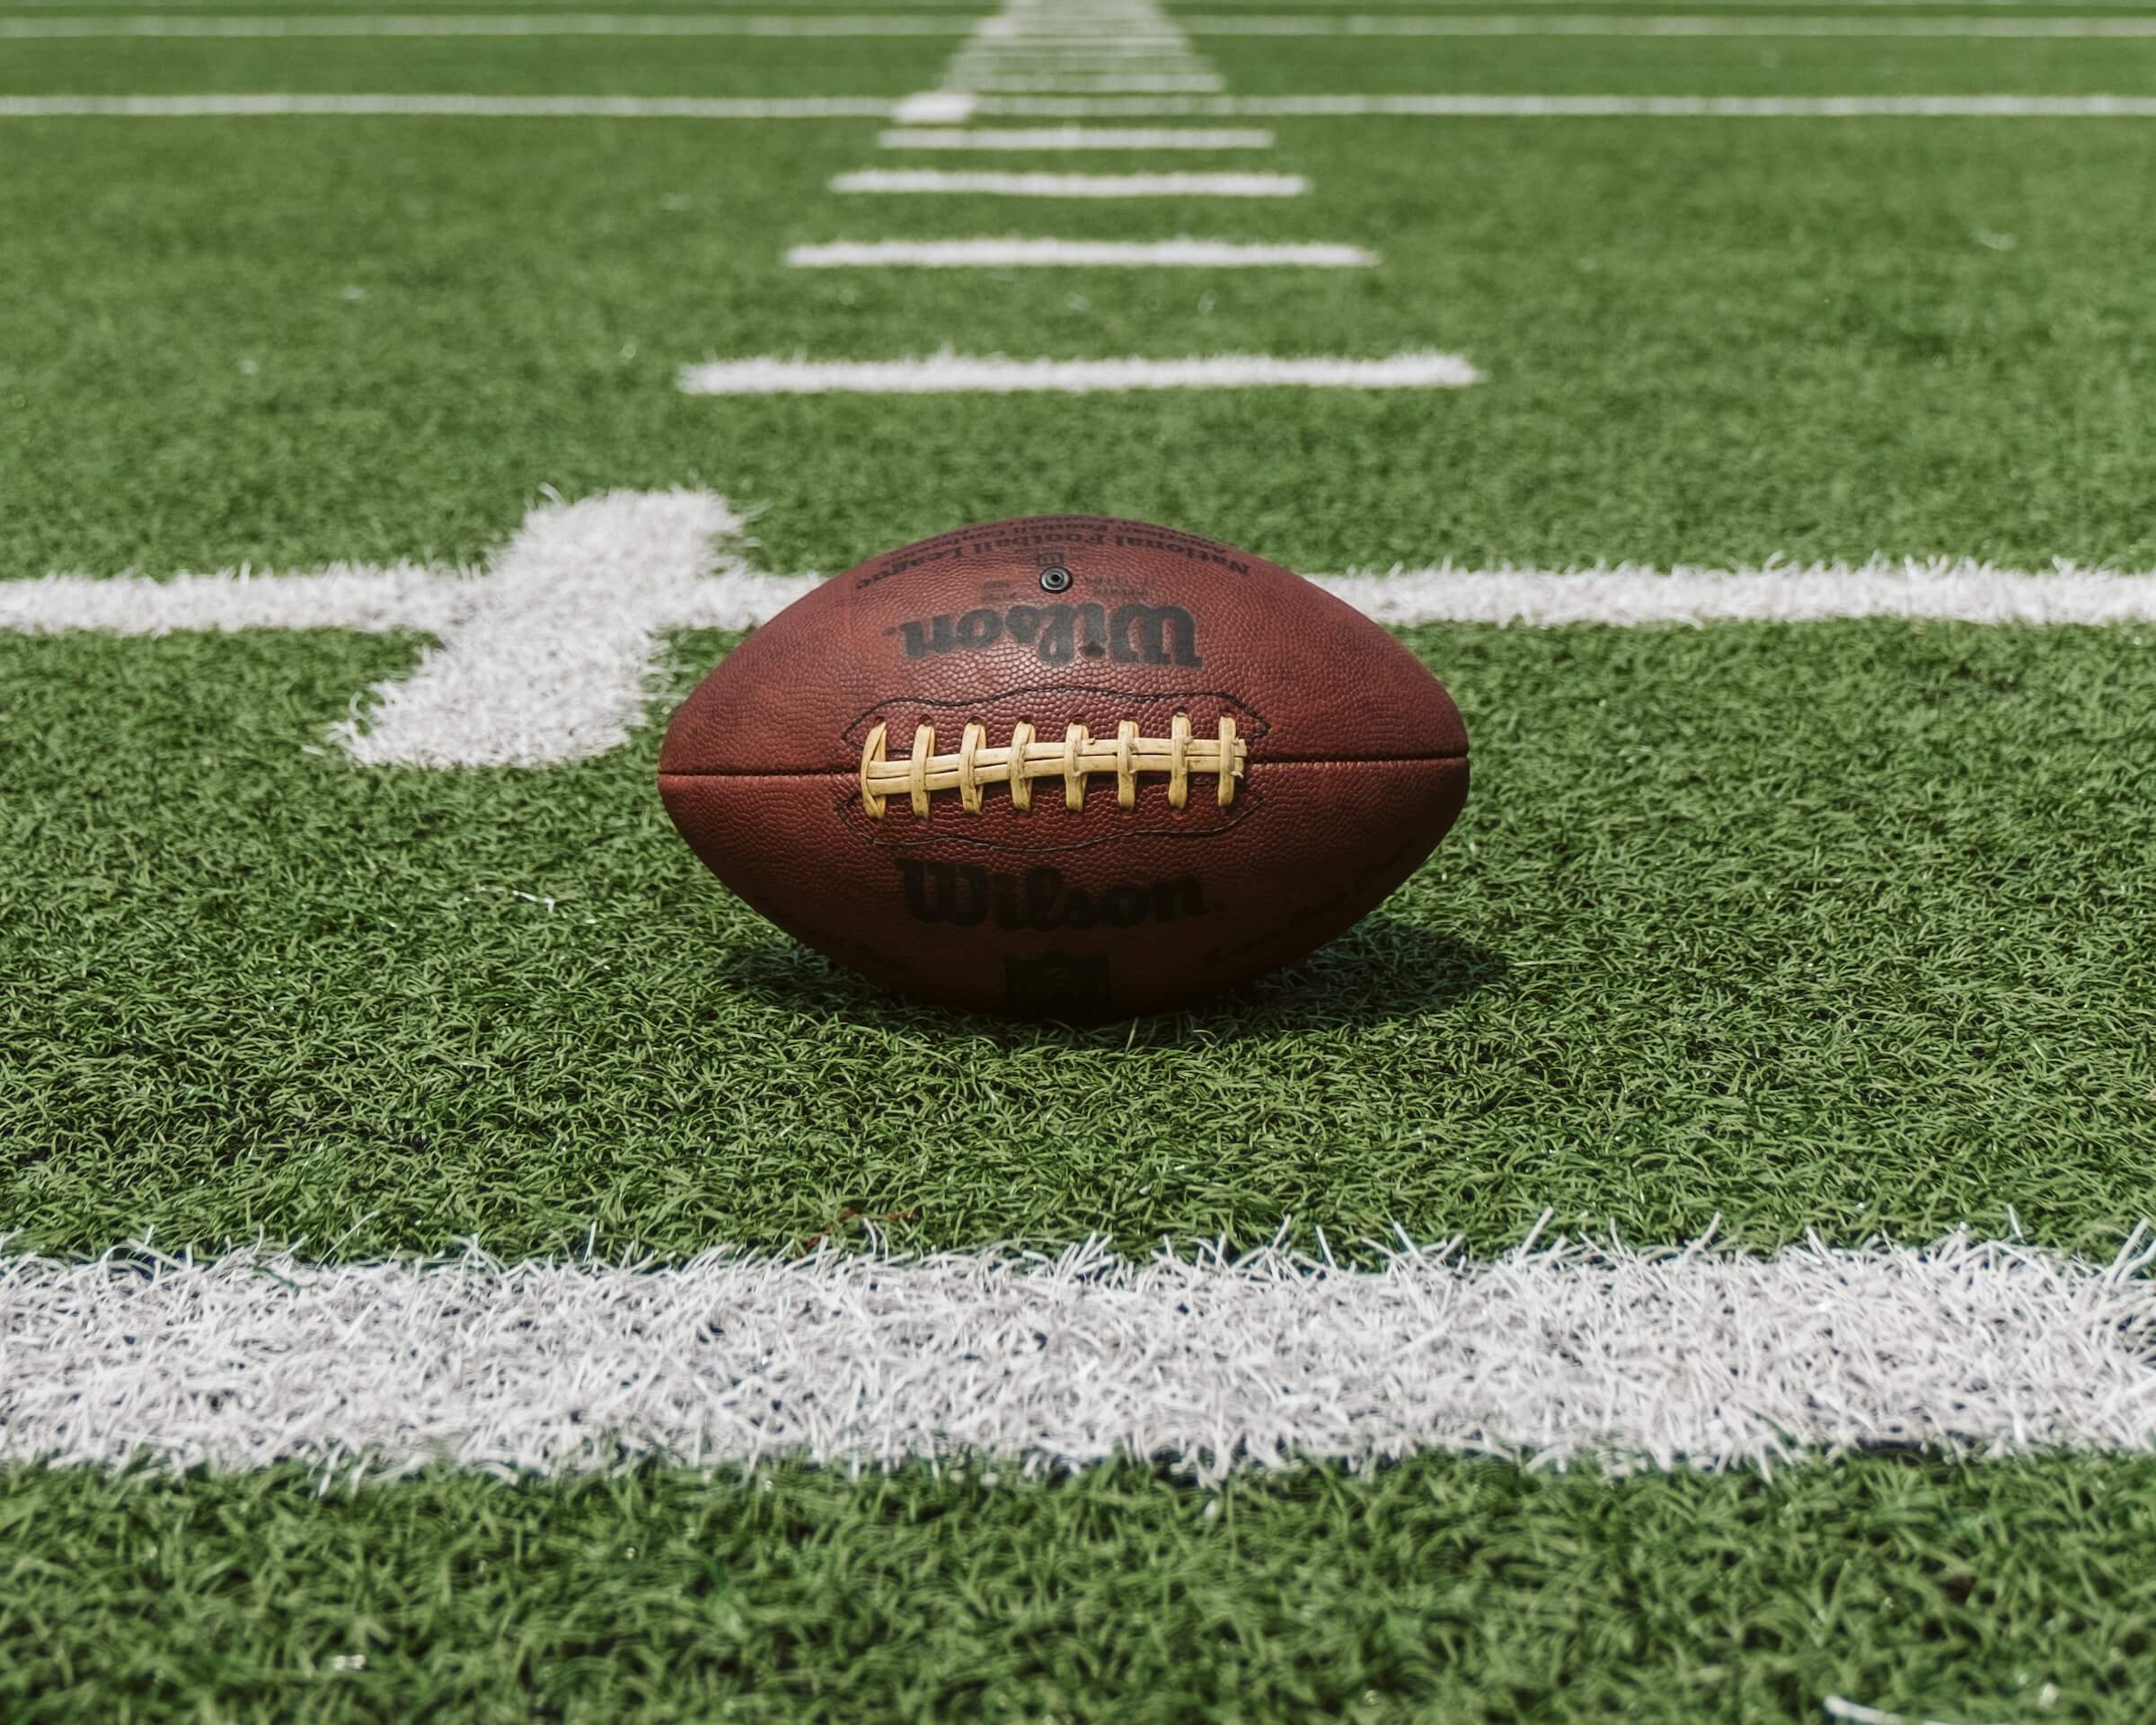 WATCH LIVE: Dallas Cowboys vs. Washington Football Team NFL